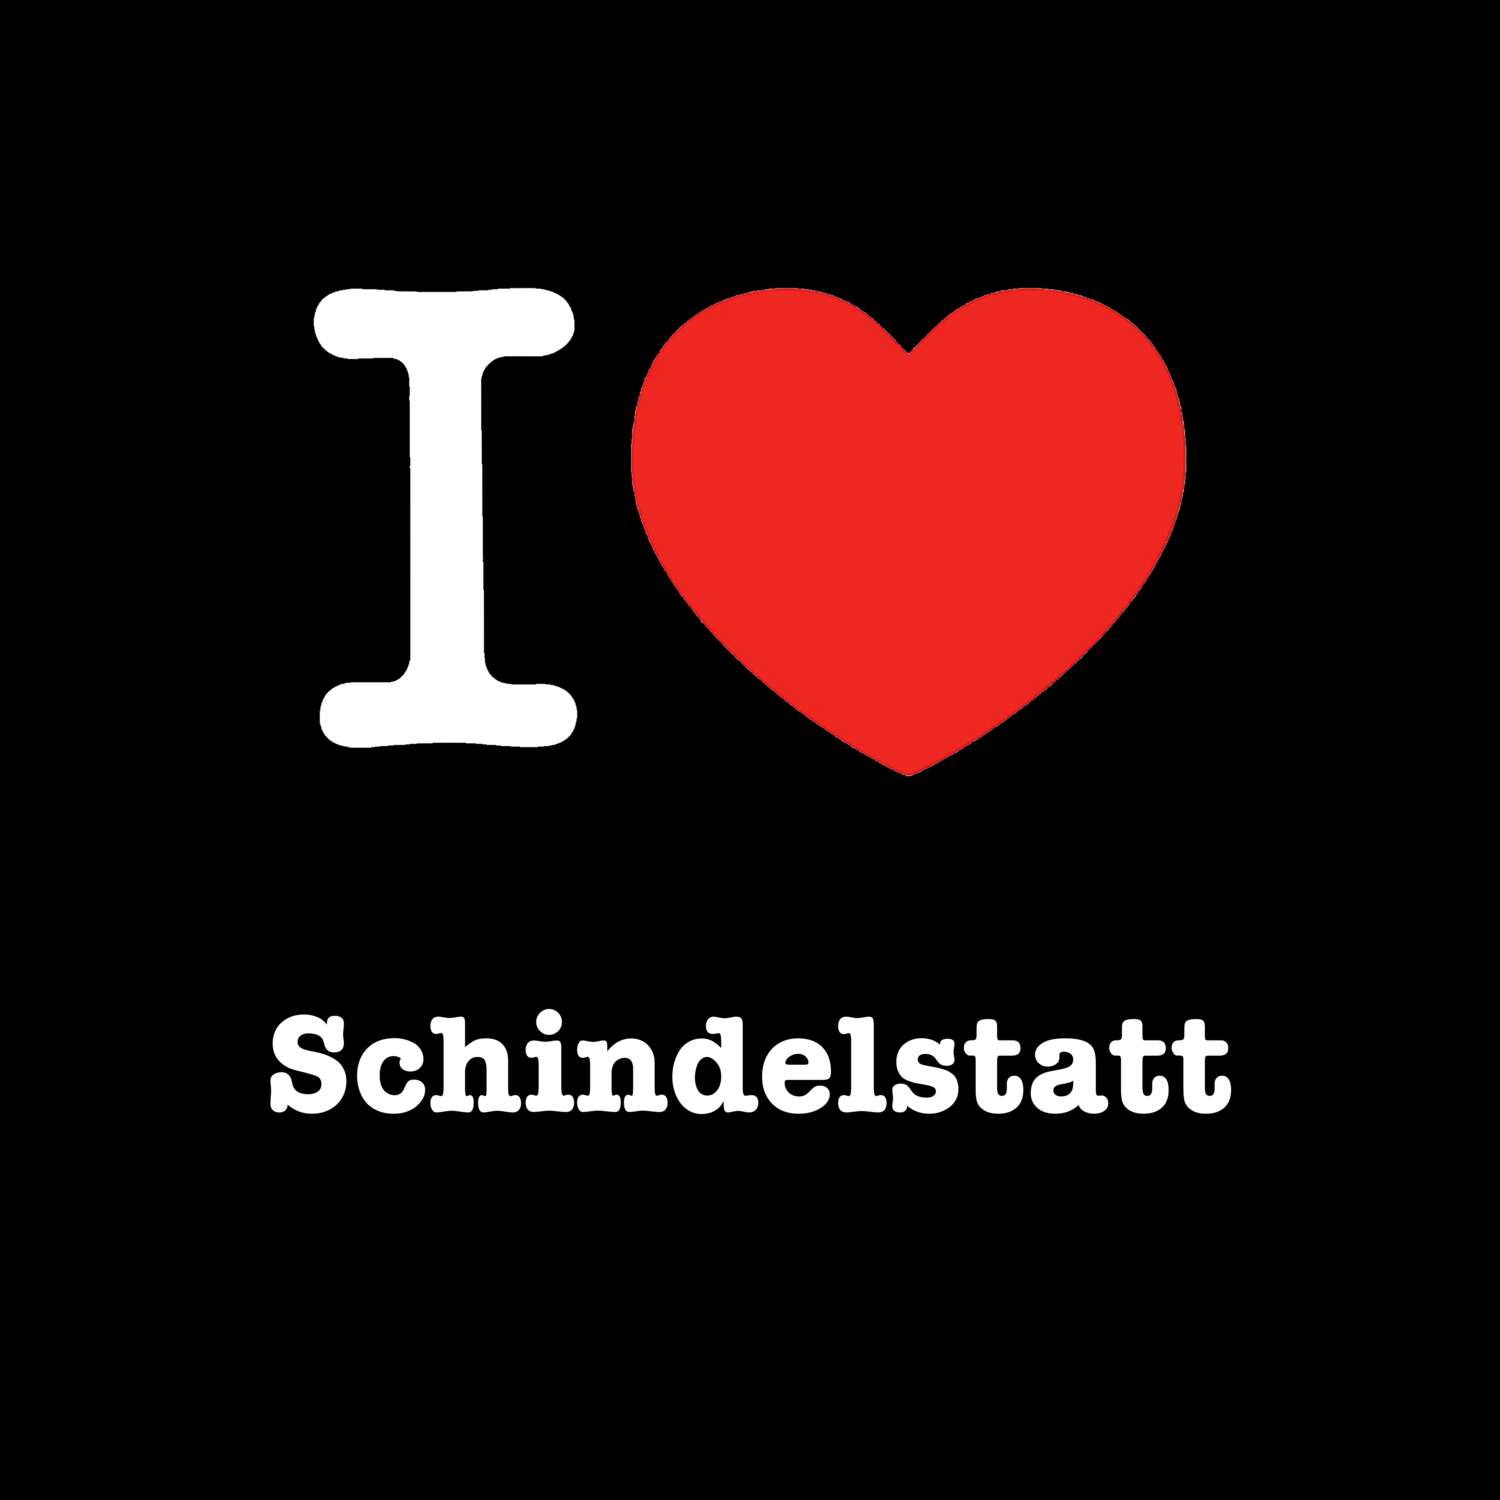 Schindelstatt T-Shirt »I love«